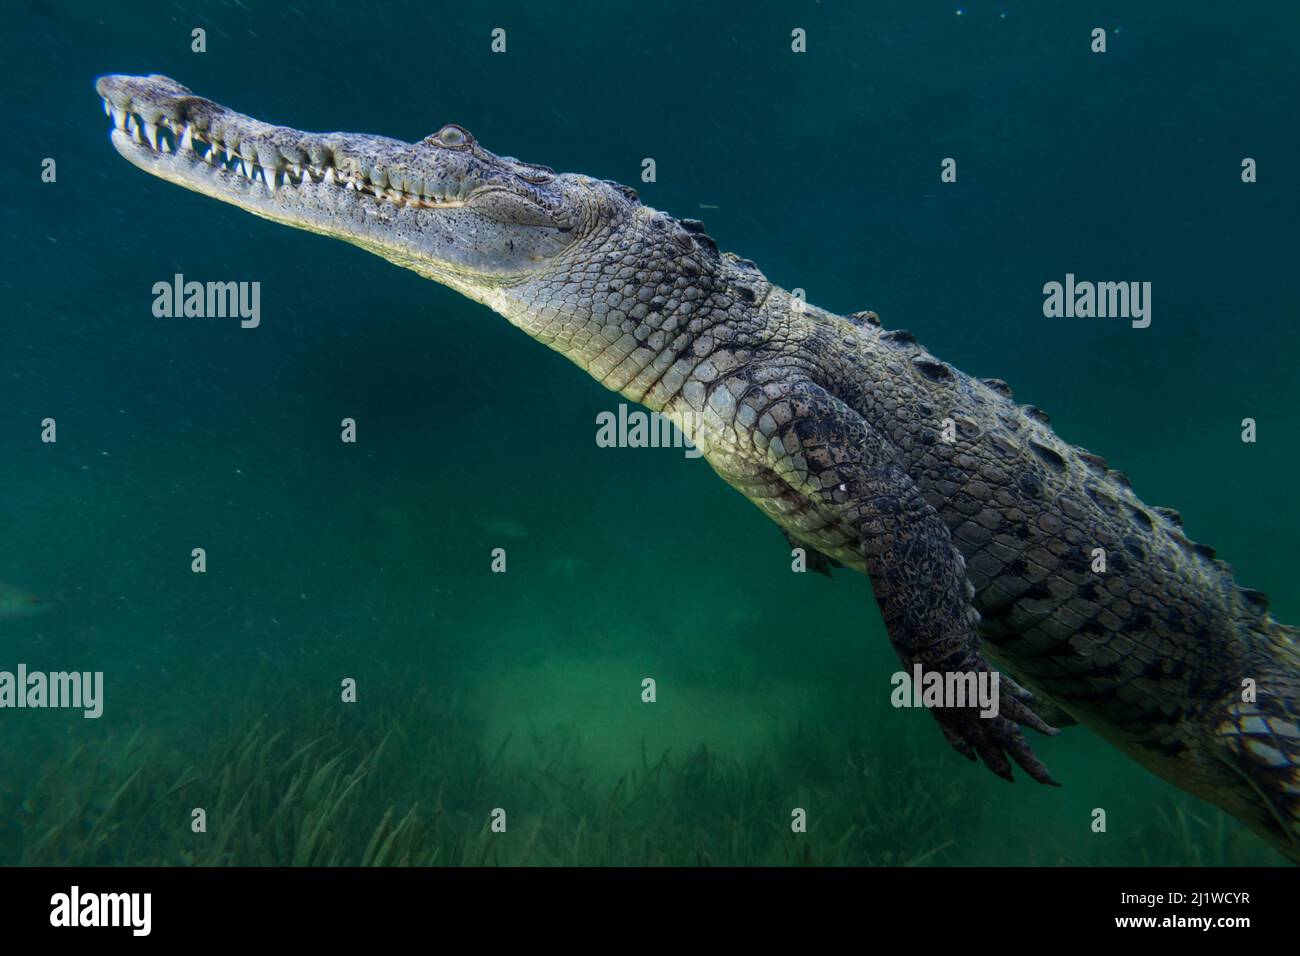 American crocodile (Crocodylus acutus), Jardines de la Reina / Gardens of the Queen National Park, Caribbean Sea, Ciego de Avila, Cuba. Stock Photo